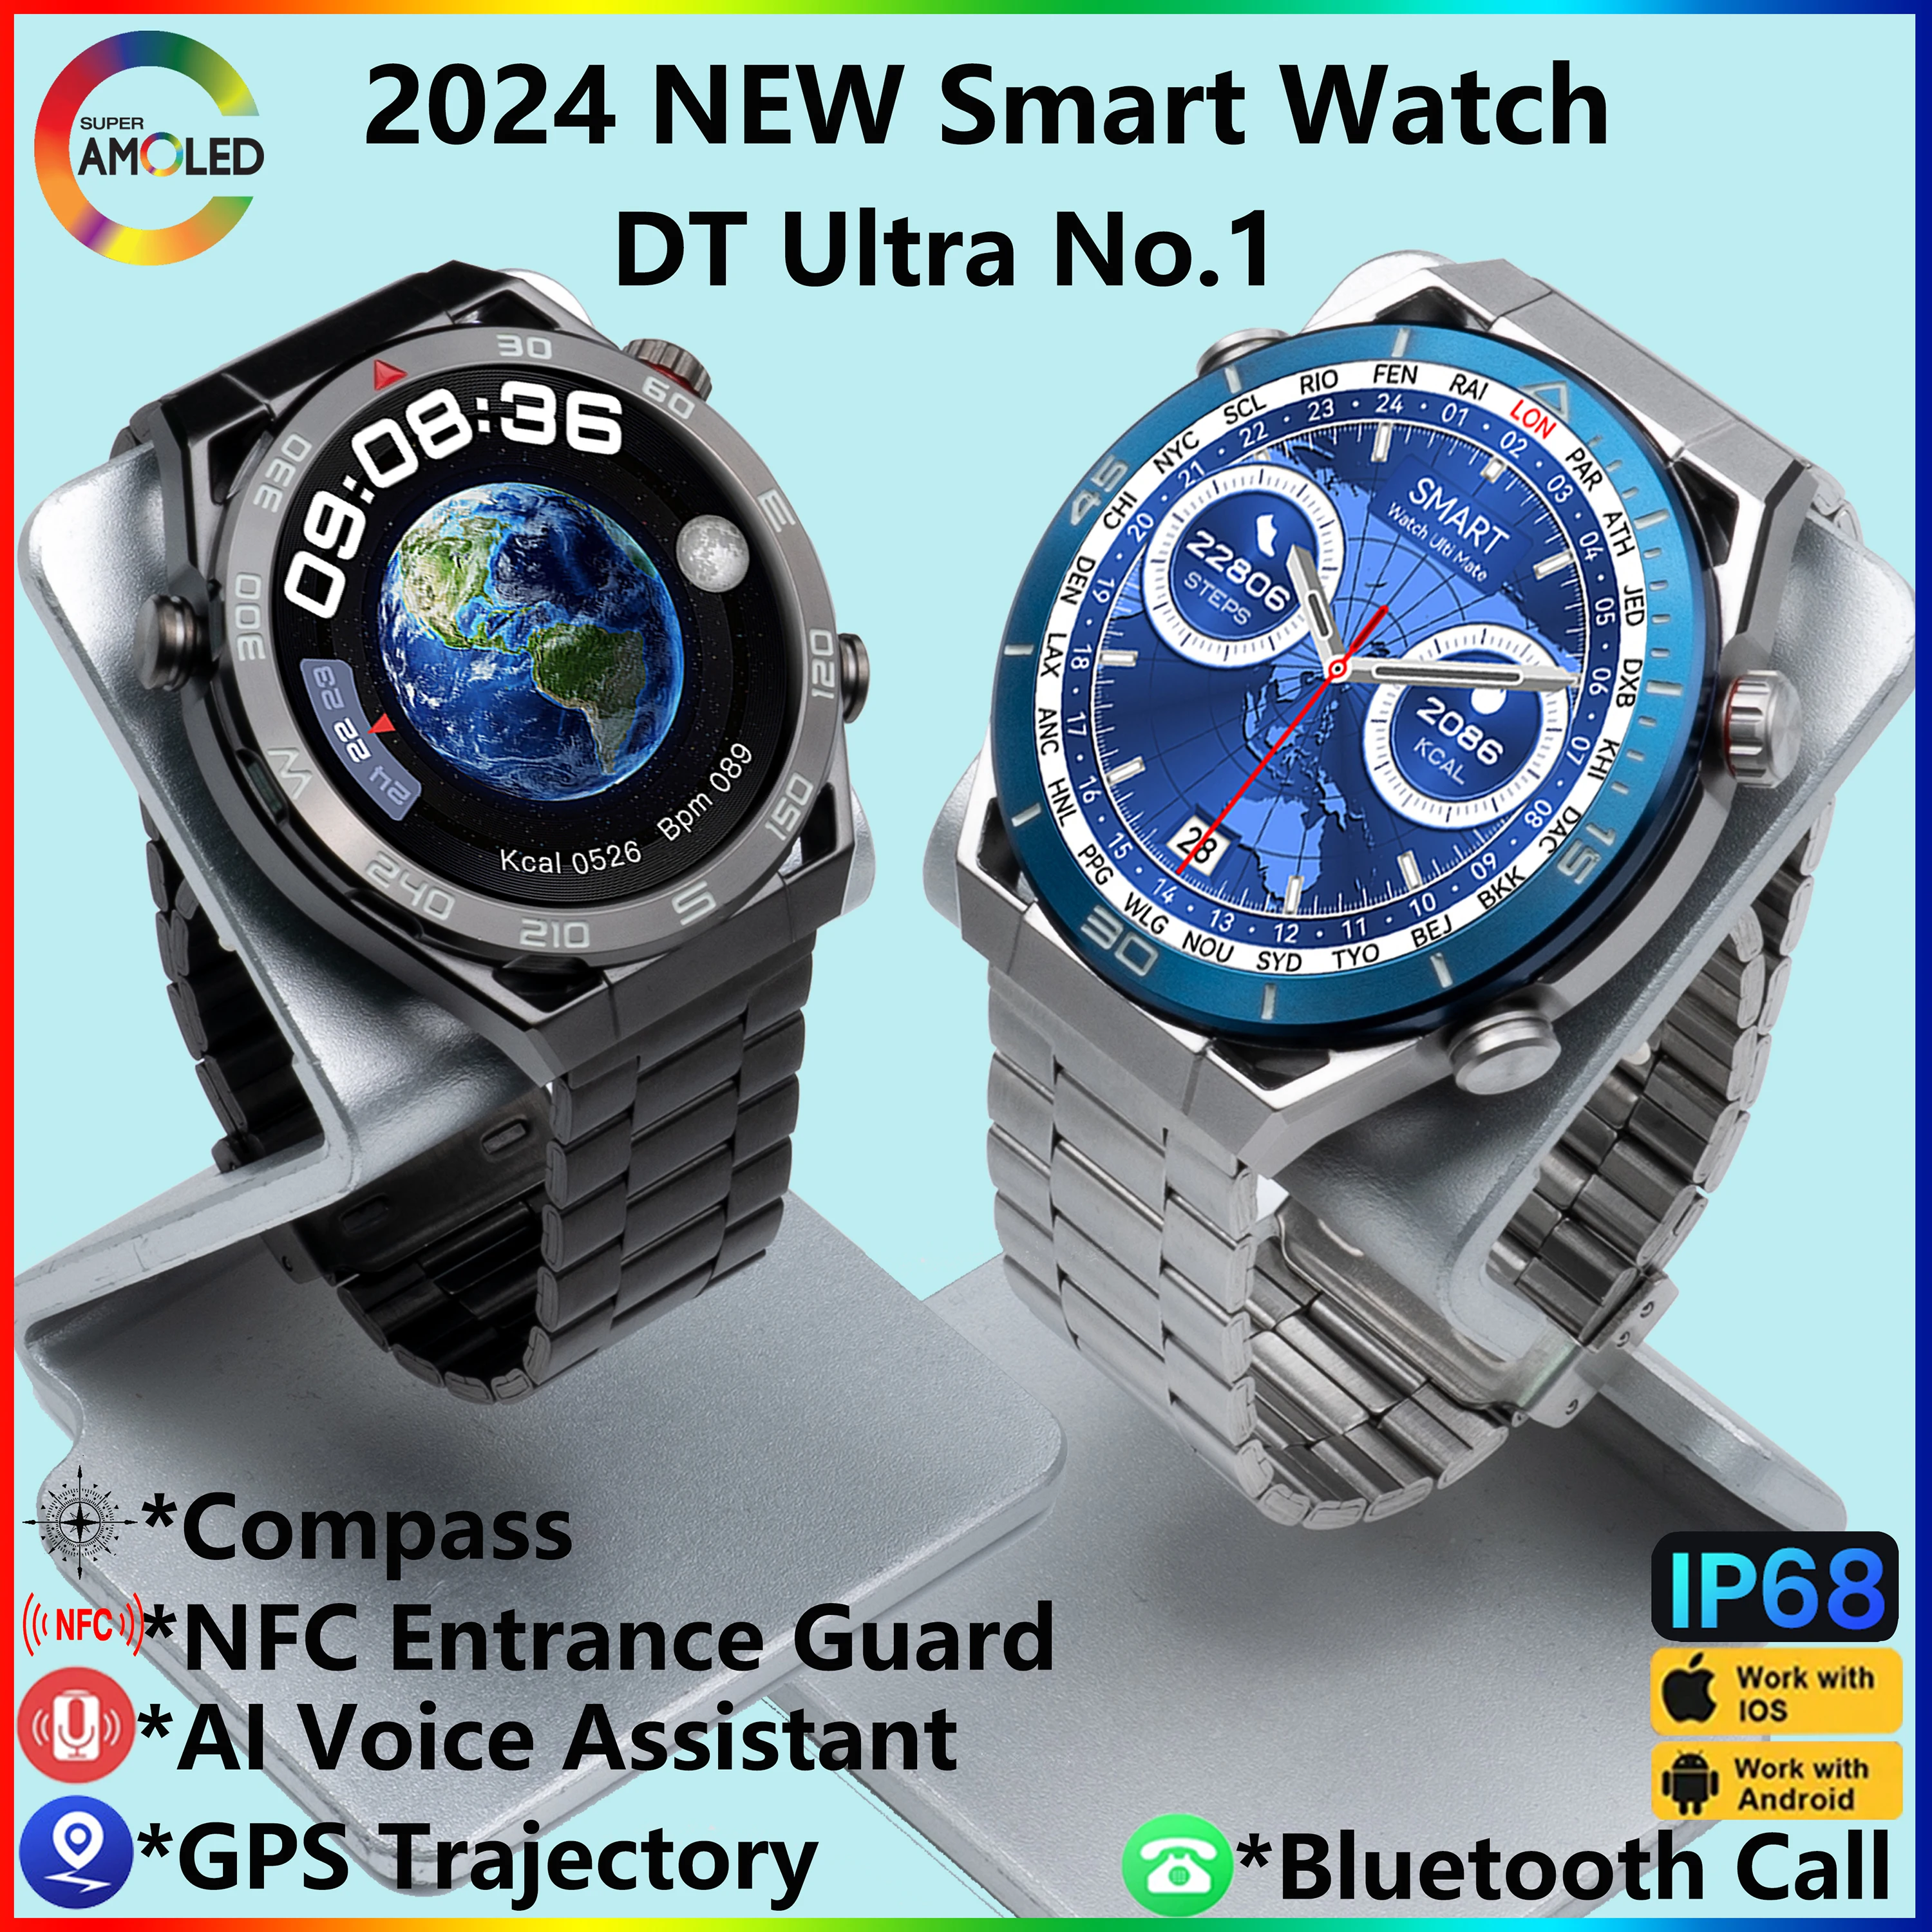 

For Huawei Men's GPS Trajectory Smartwatch ECG+PPG 454*454 AMOLED HD NFC Bluetooth Call IP68 Waterproof Sports Smartwatch